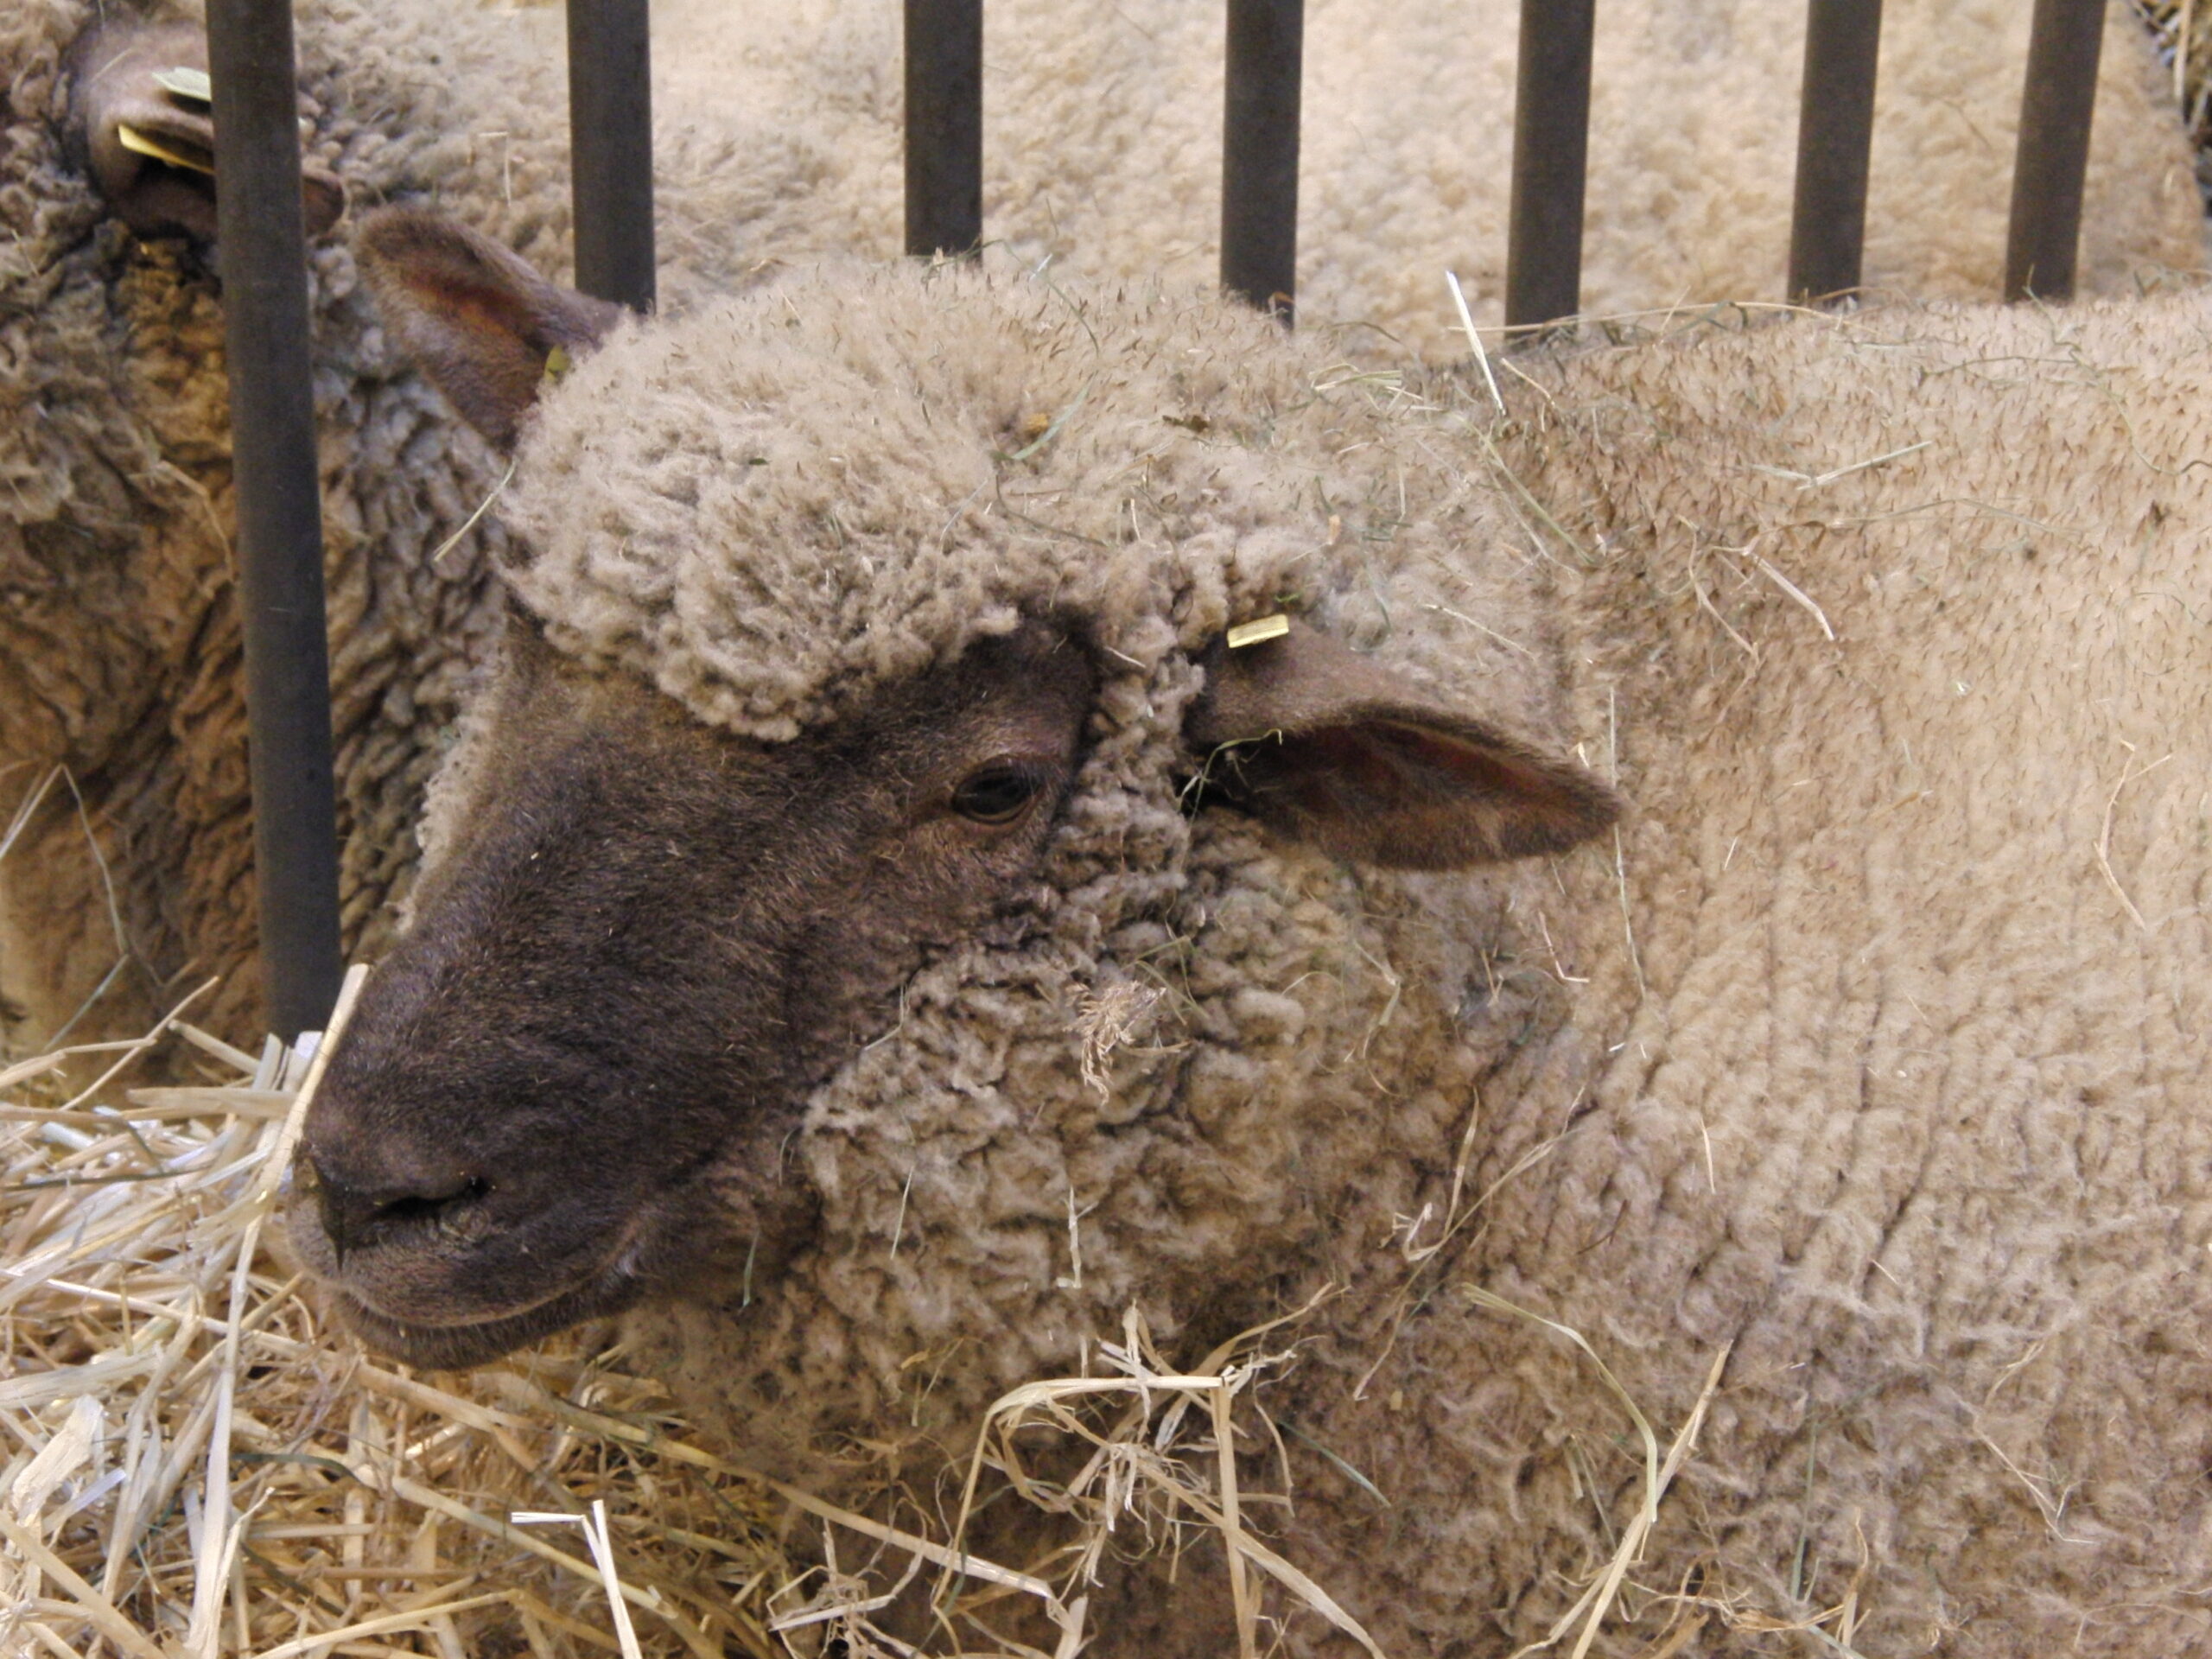 Vendée sheep